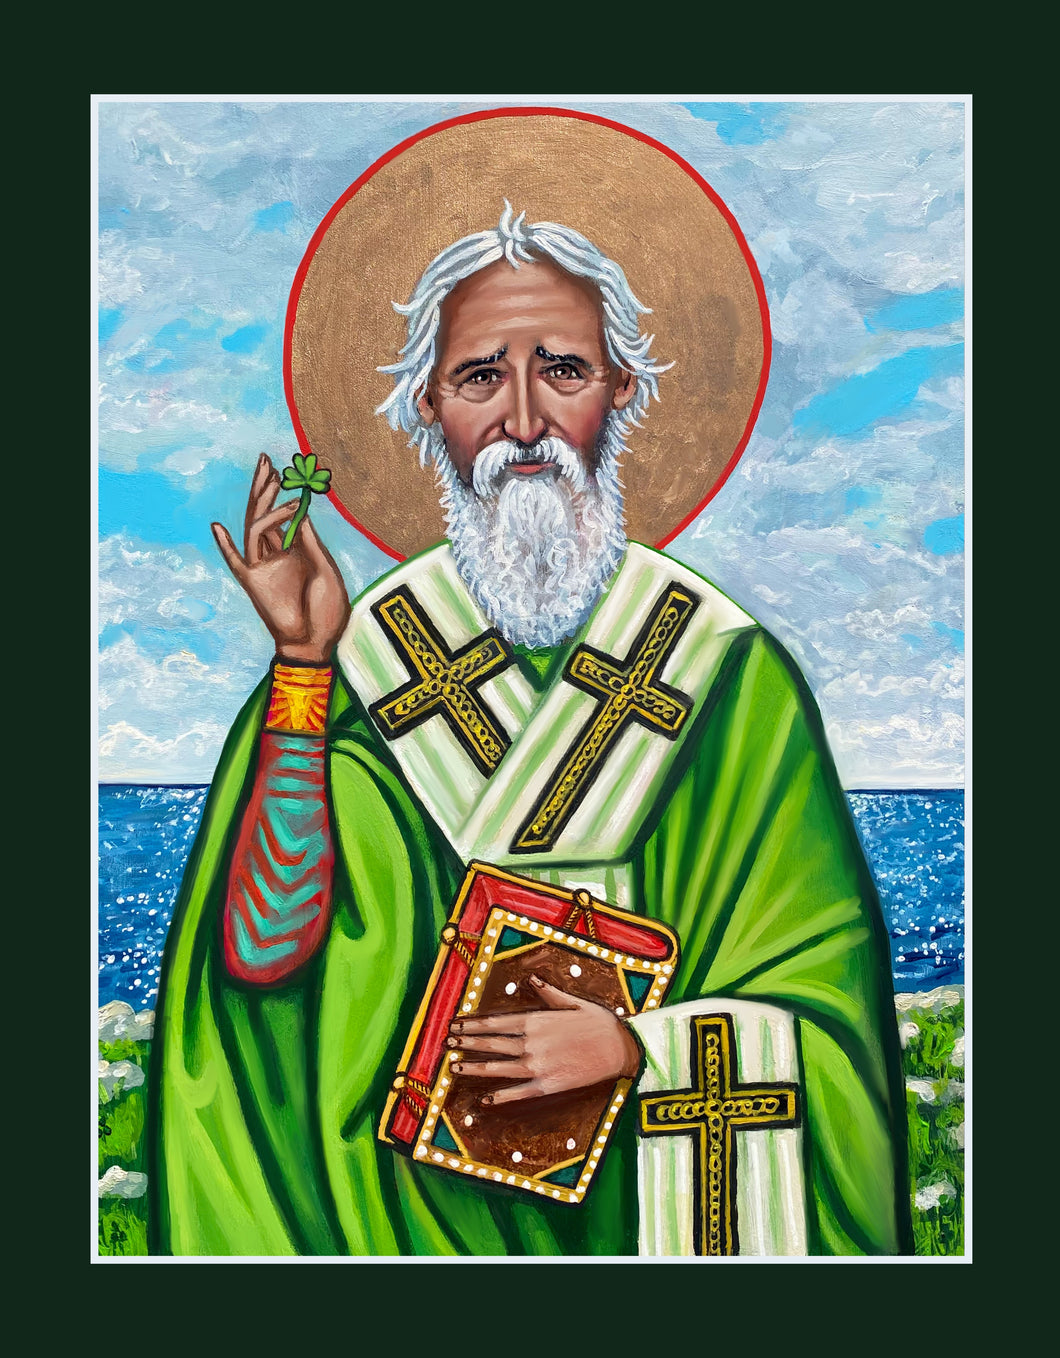 St. Patrick Digital Image